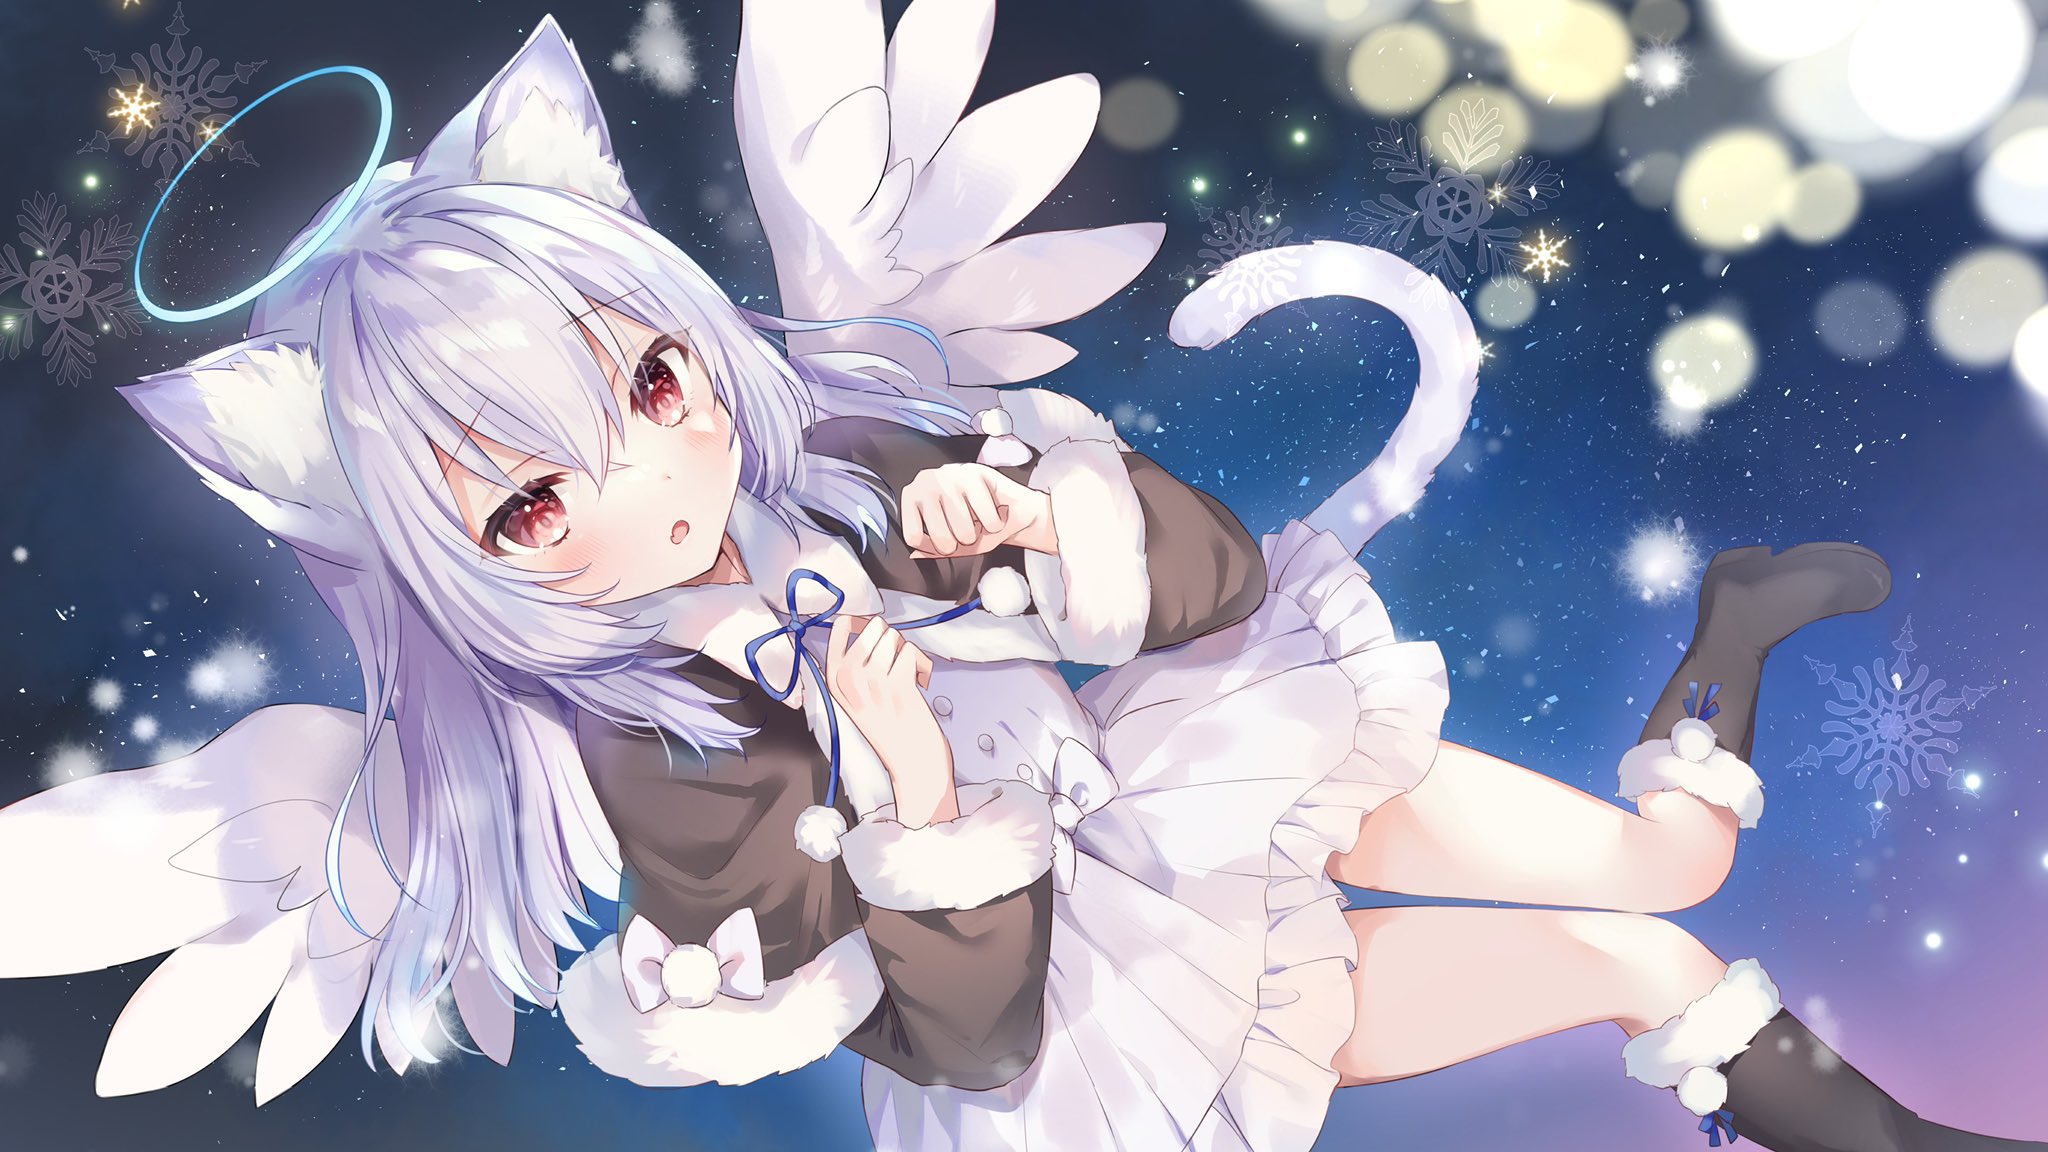 Anime 2048x1152 anime anime girls Rucaco artwork cat girl angel girl silver hair red eyes snowflakes